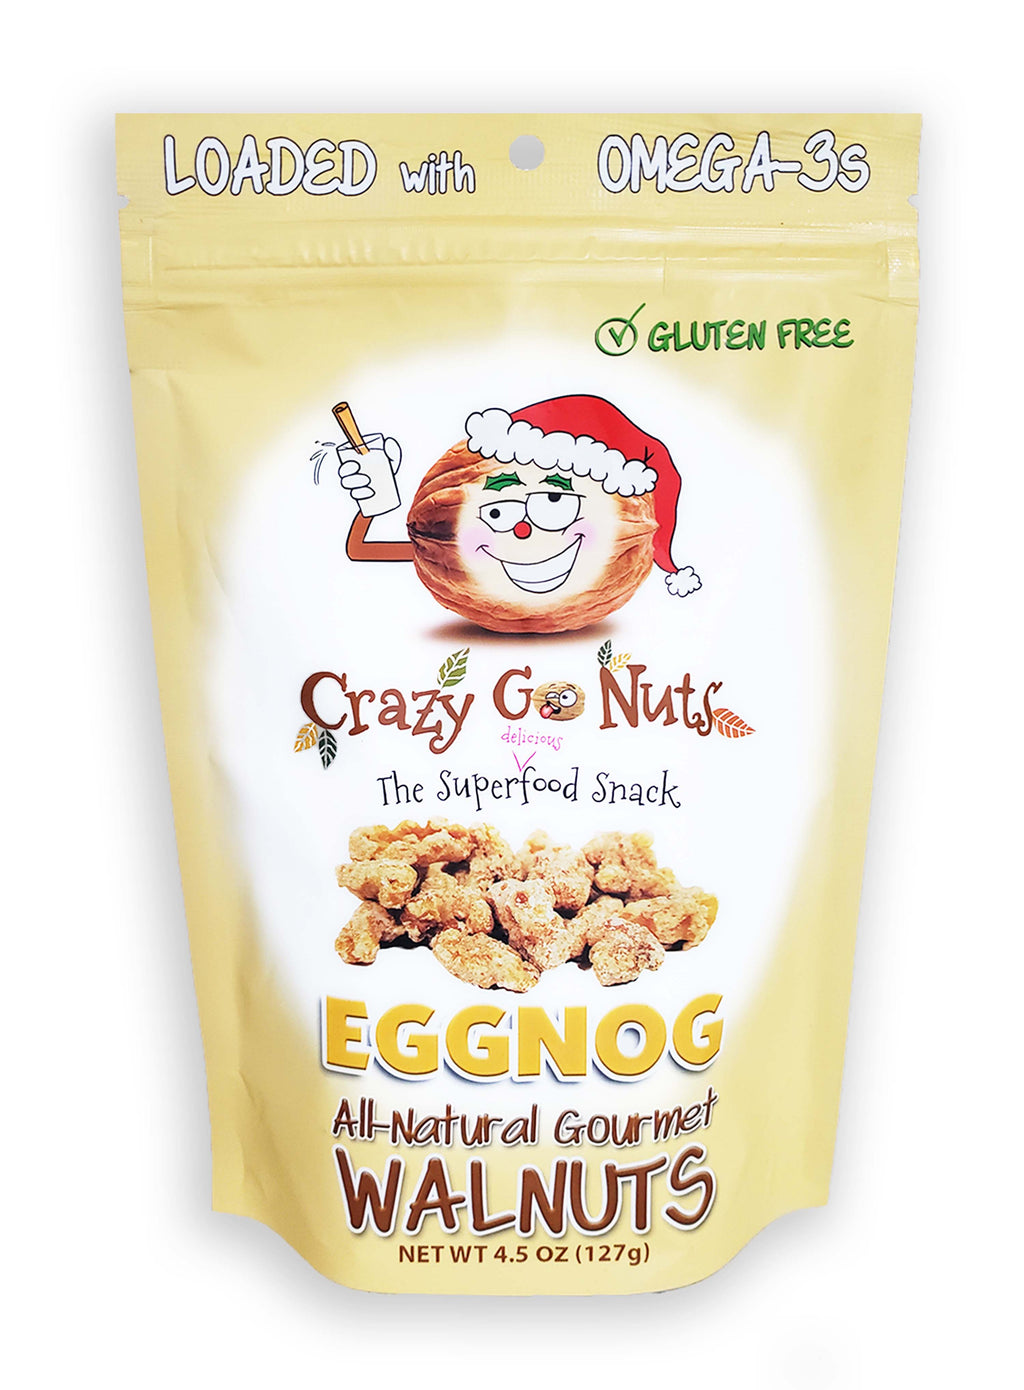 A bag of eggnog coated walnut snacks